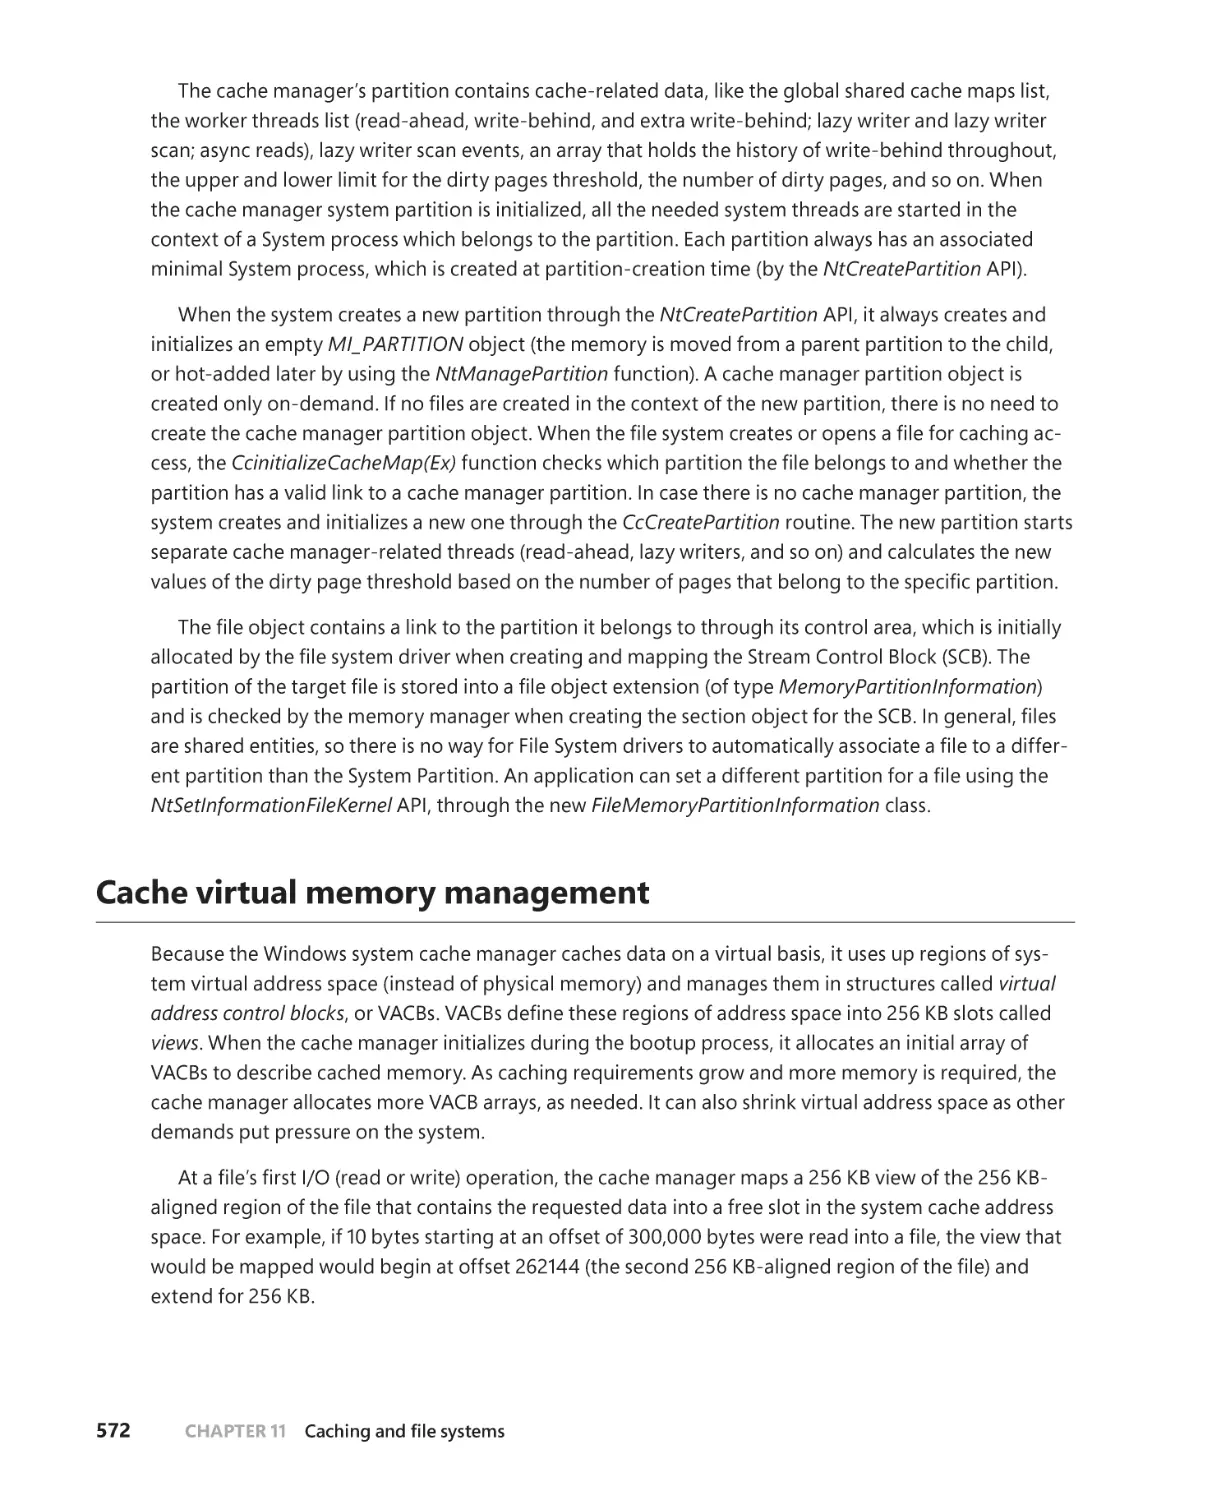 Cache virtual memory management